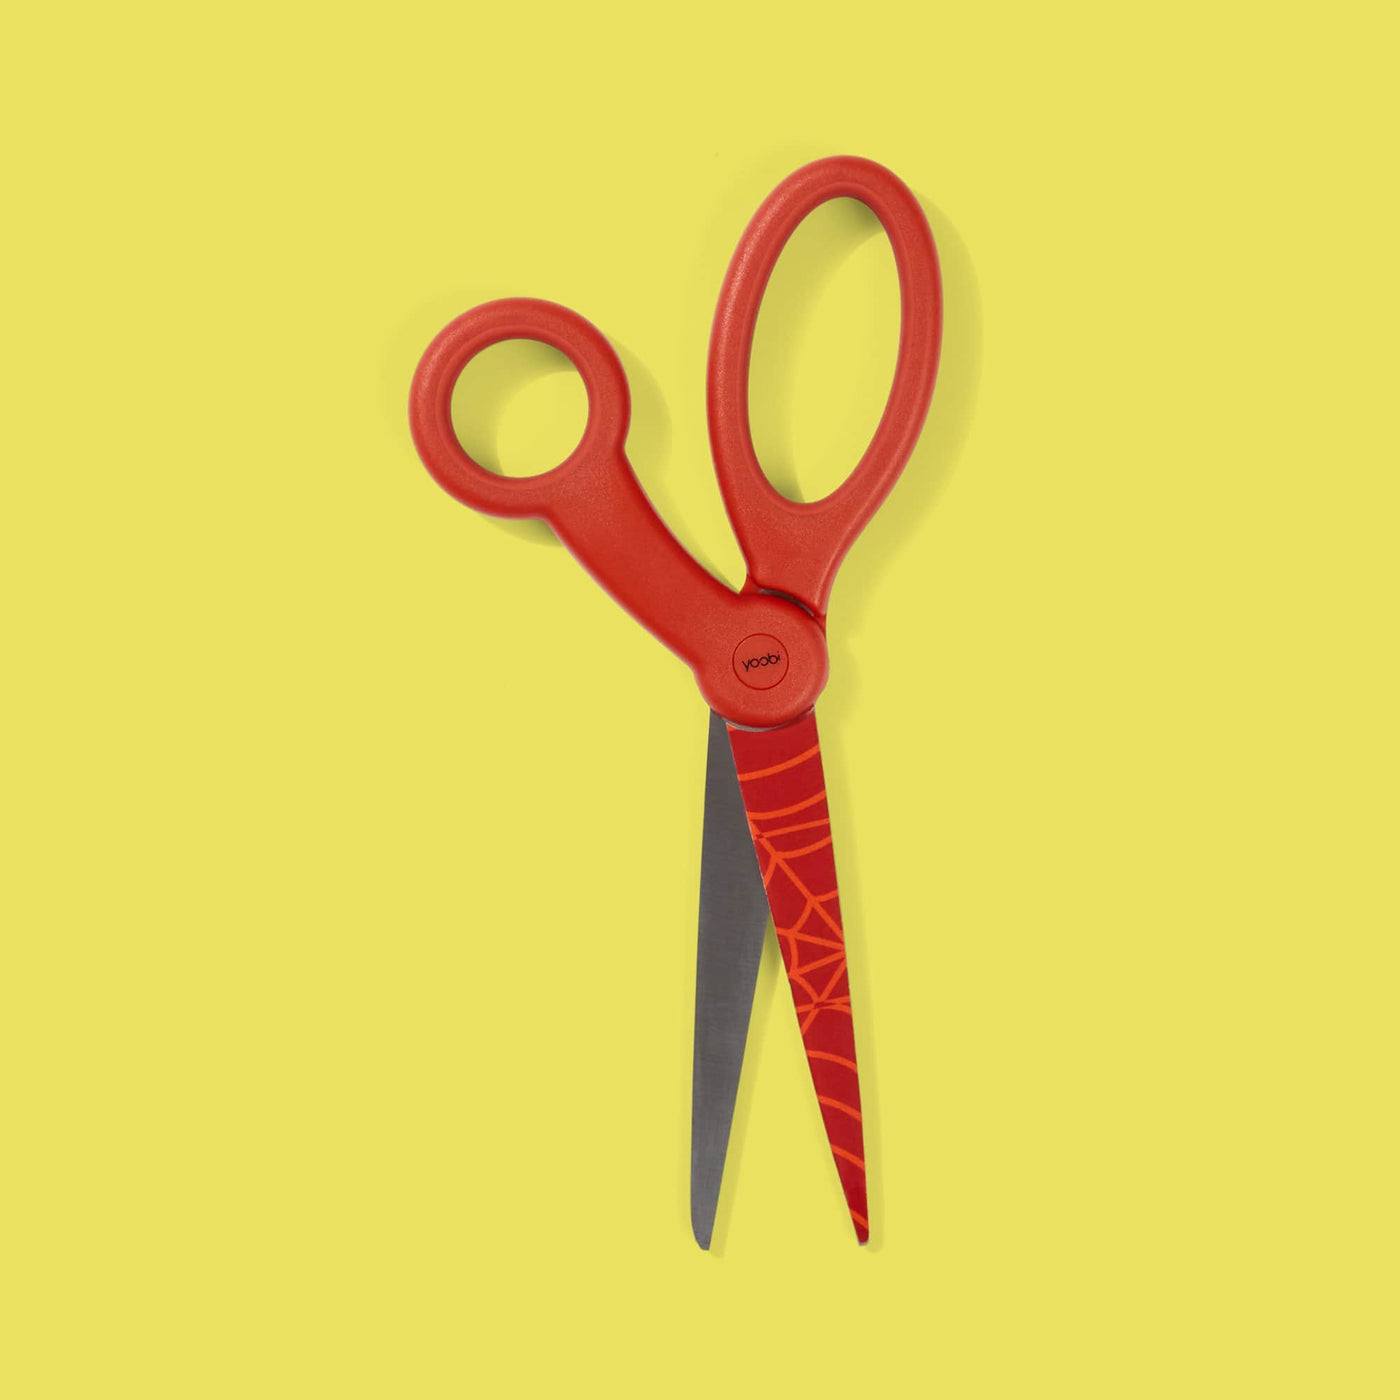 Yoobi x Marvel Red Spider-Man Adult Scissors w/ 4” Blade - Sharp Tip  Scissors for Adults - Comfort-Grip Handles, Sharp Scissors for School, Home  or